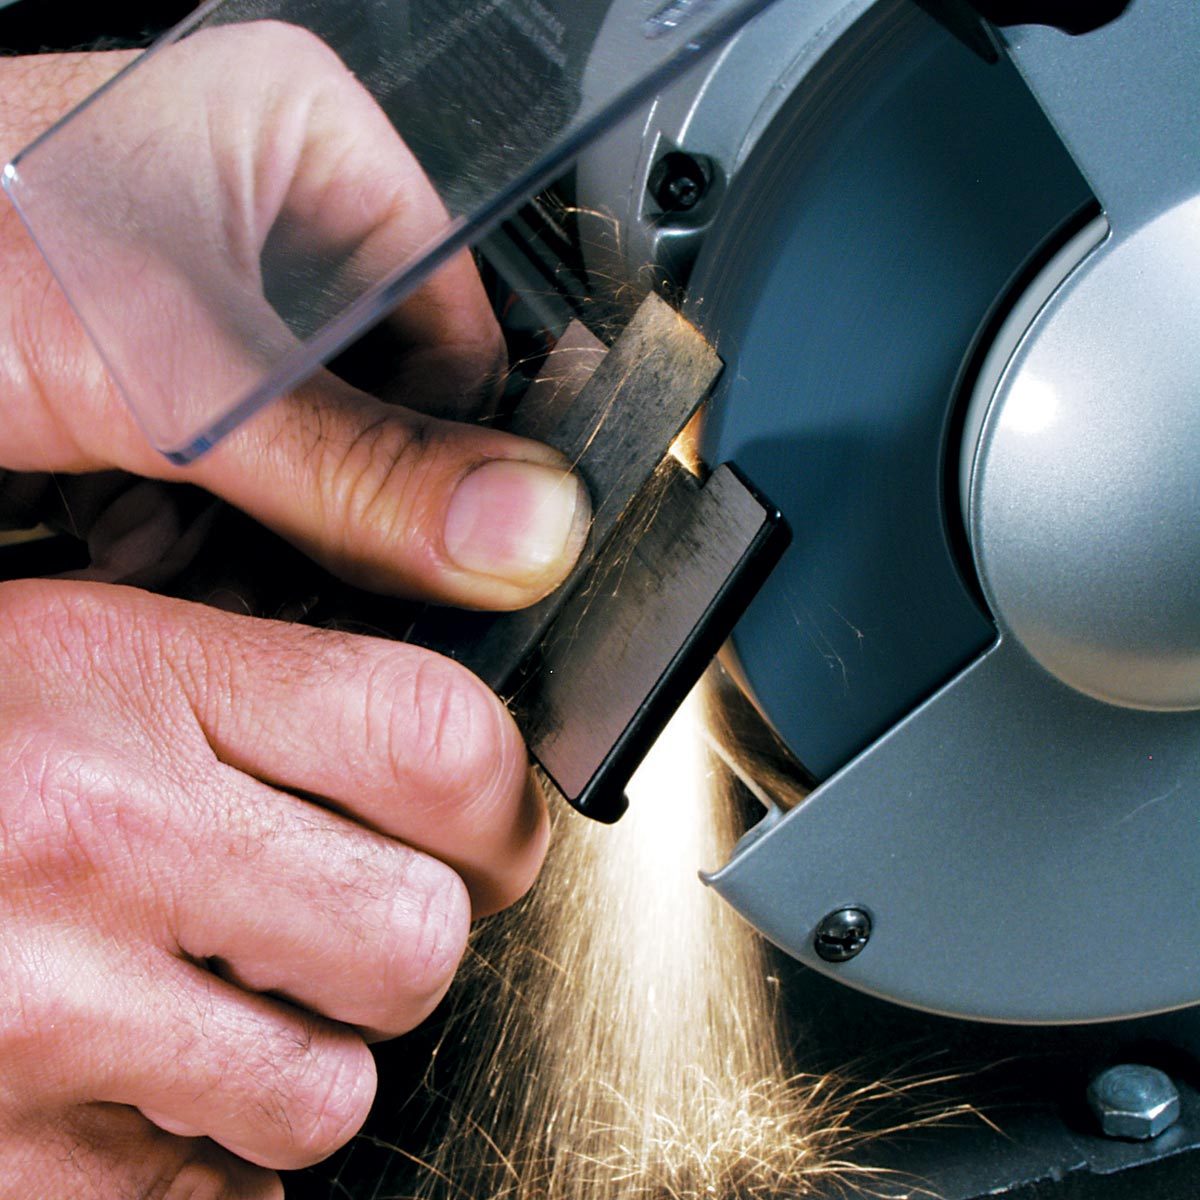 Sandpaper Sharpening Jig - Sharpening Tools On a Budget 